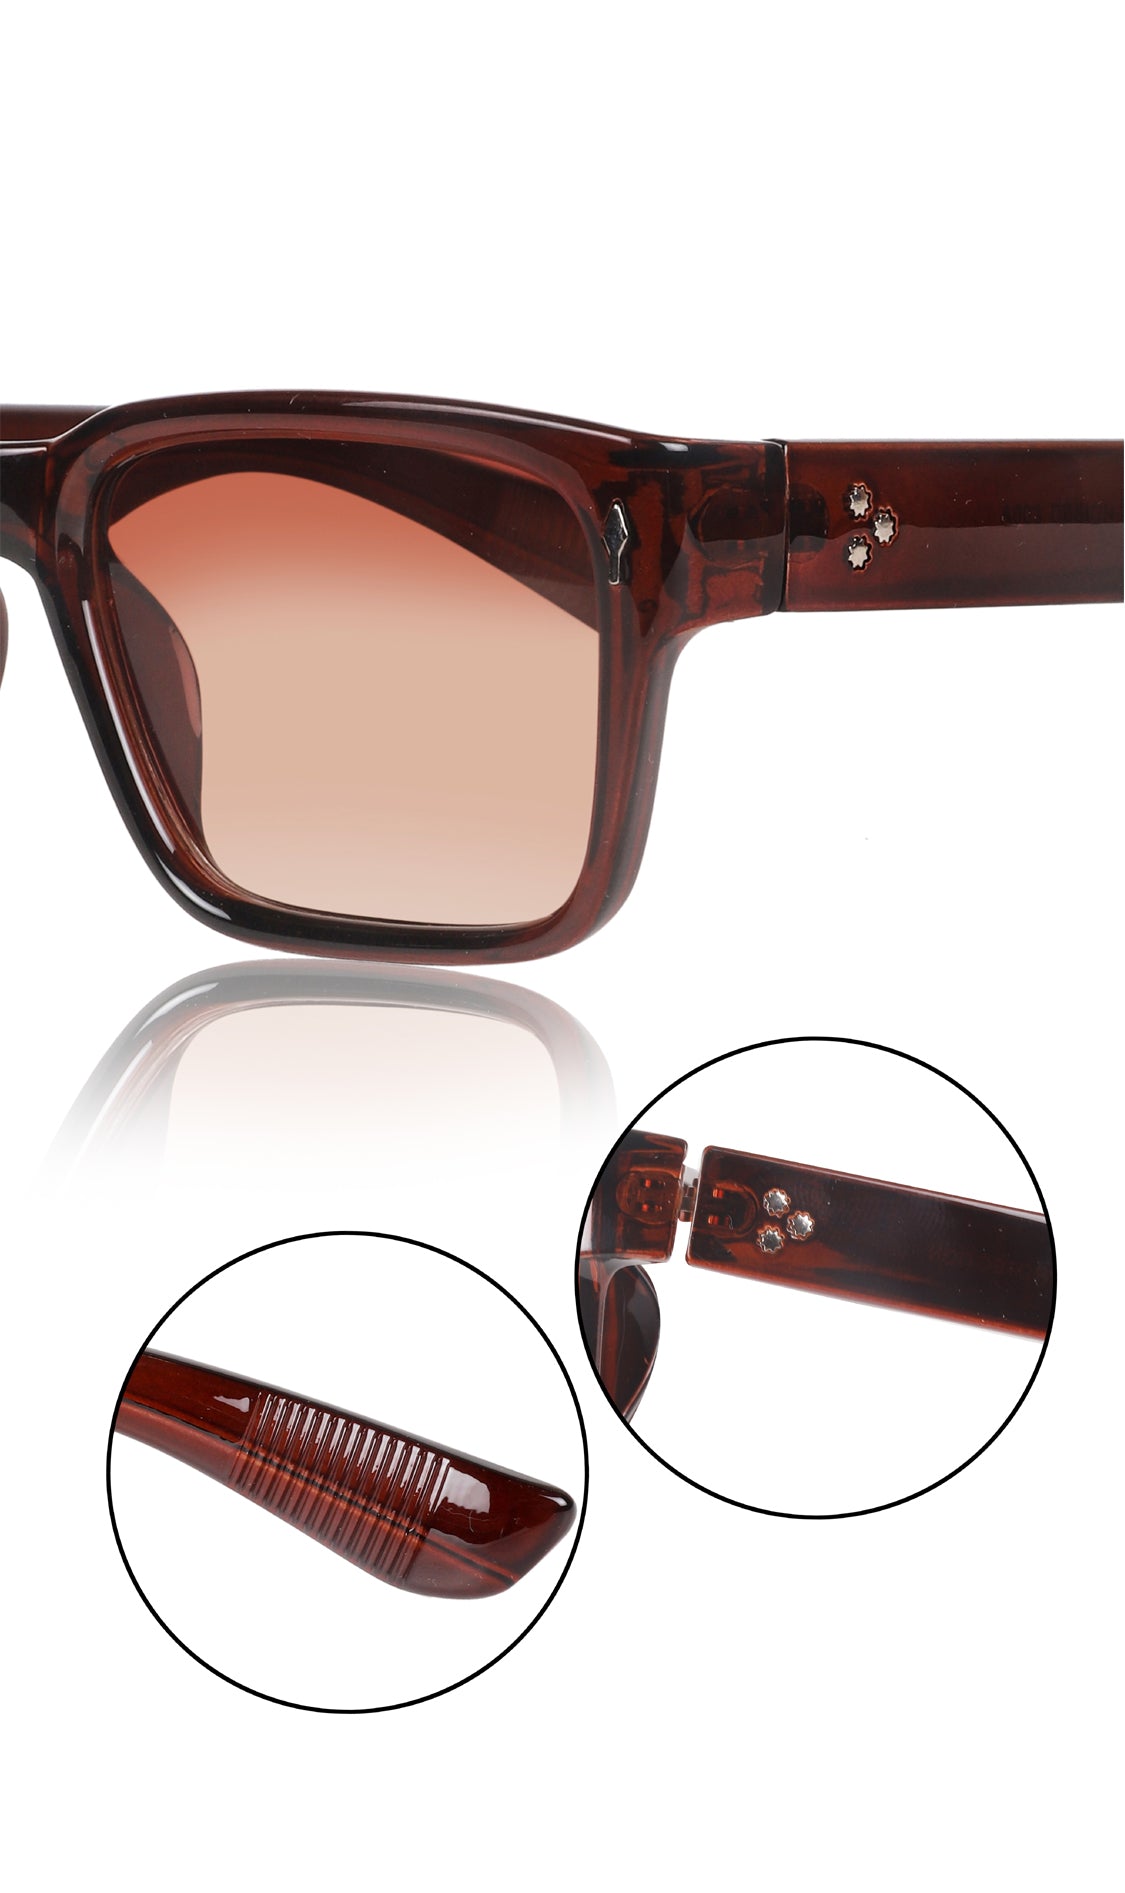 Jodykoes® Premium Series Rectangle UV Protection Sunglasses | Fashionable Sun Shades Comfortable Eyewear Eyeglasses for Men and Women (Brown) - Jodykoes ®